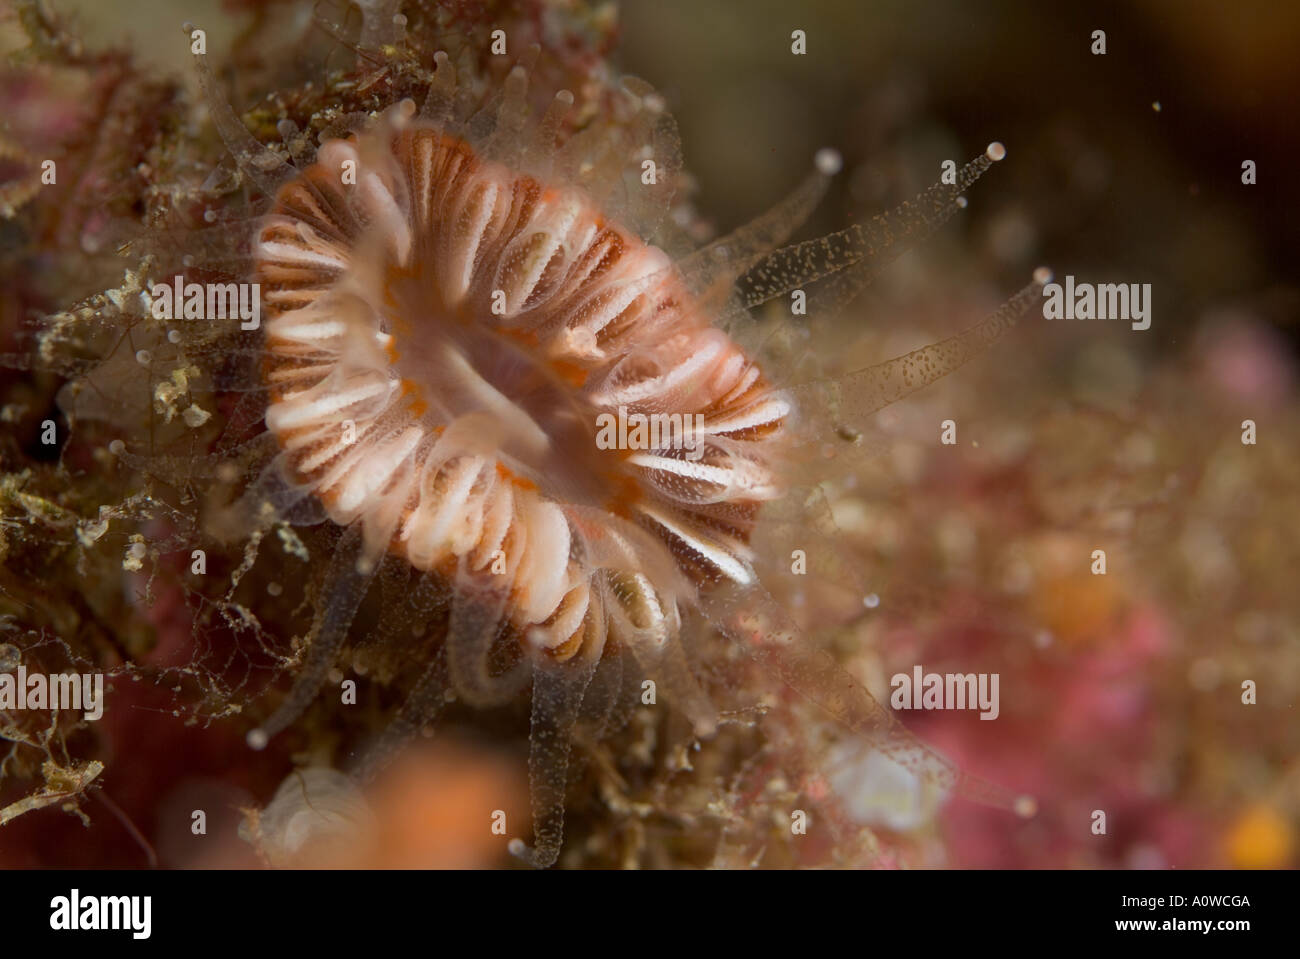 Intricate Solitary Coral (Balanophyllia europaea) on ocean floor. Stock Photo